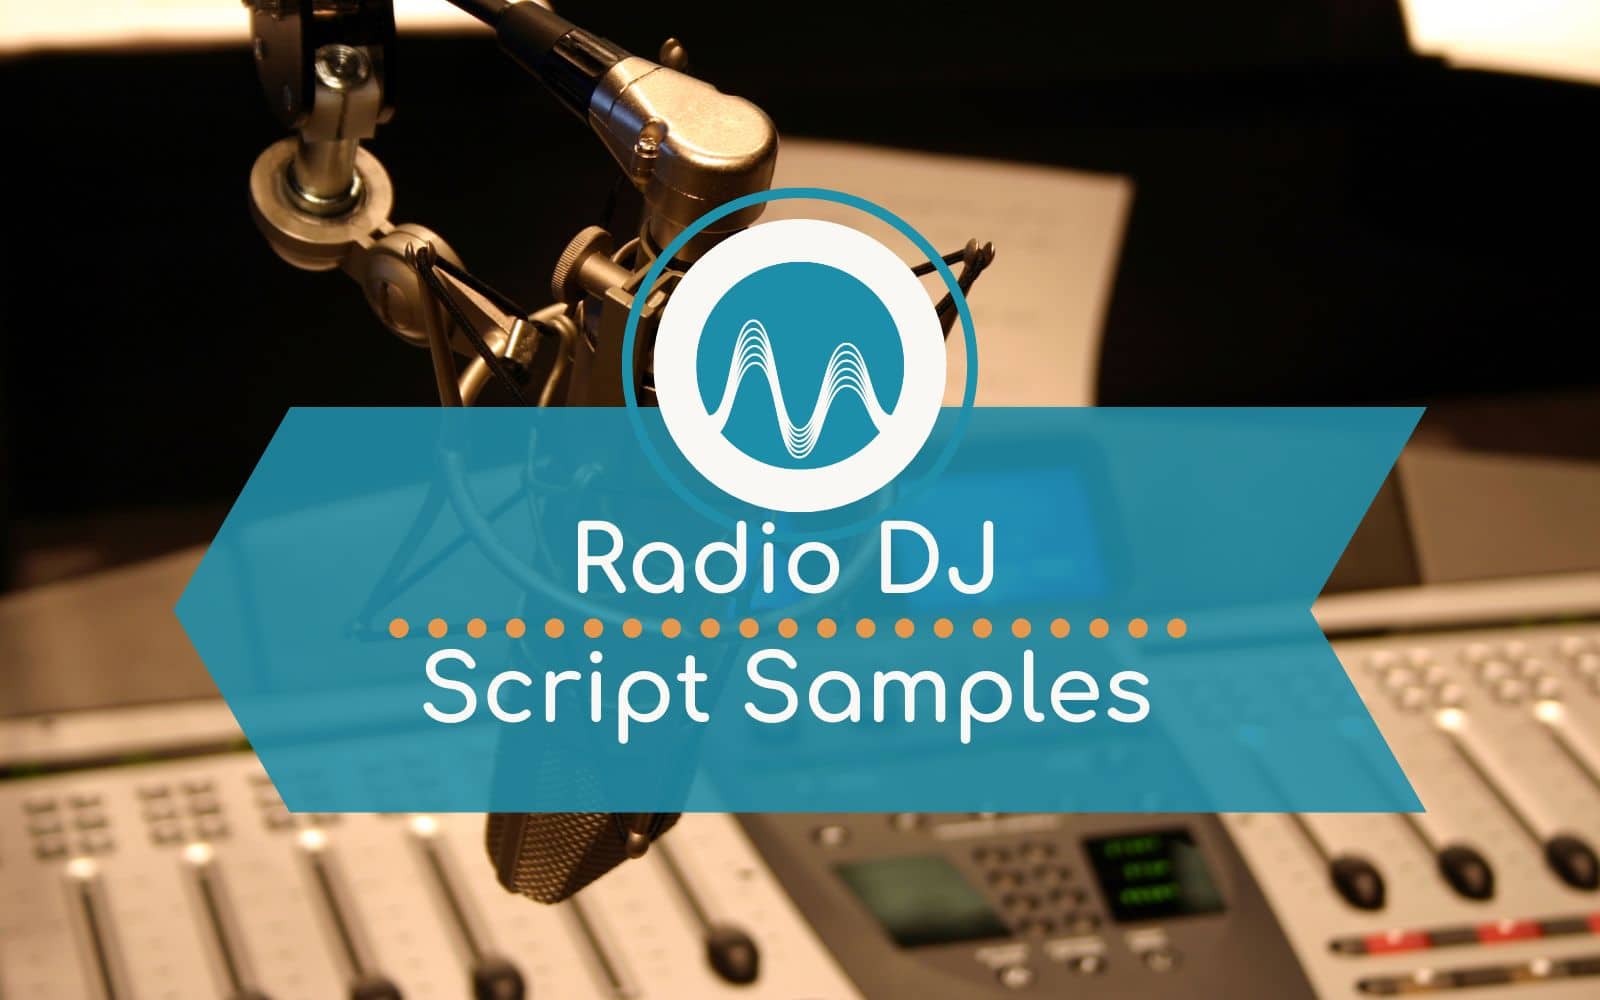 DJ Radio Script Sample